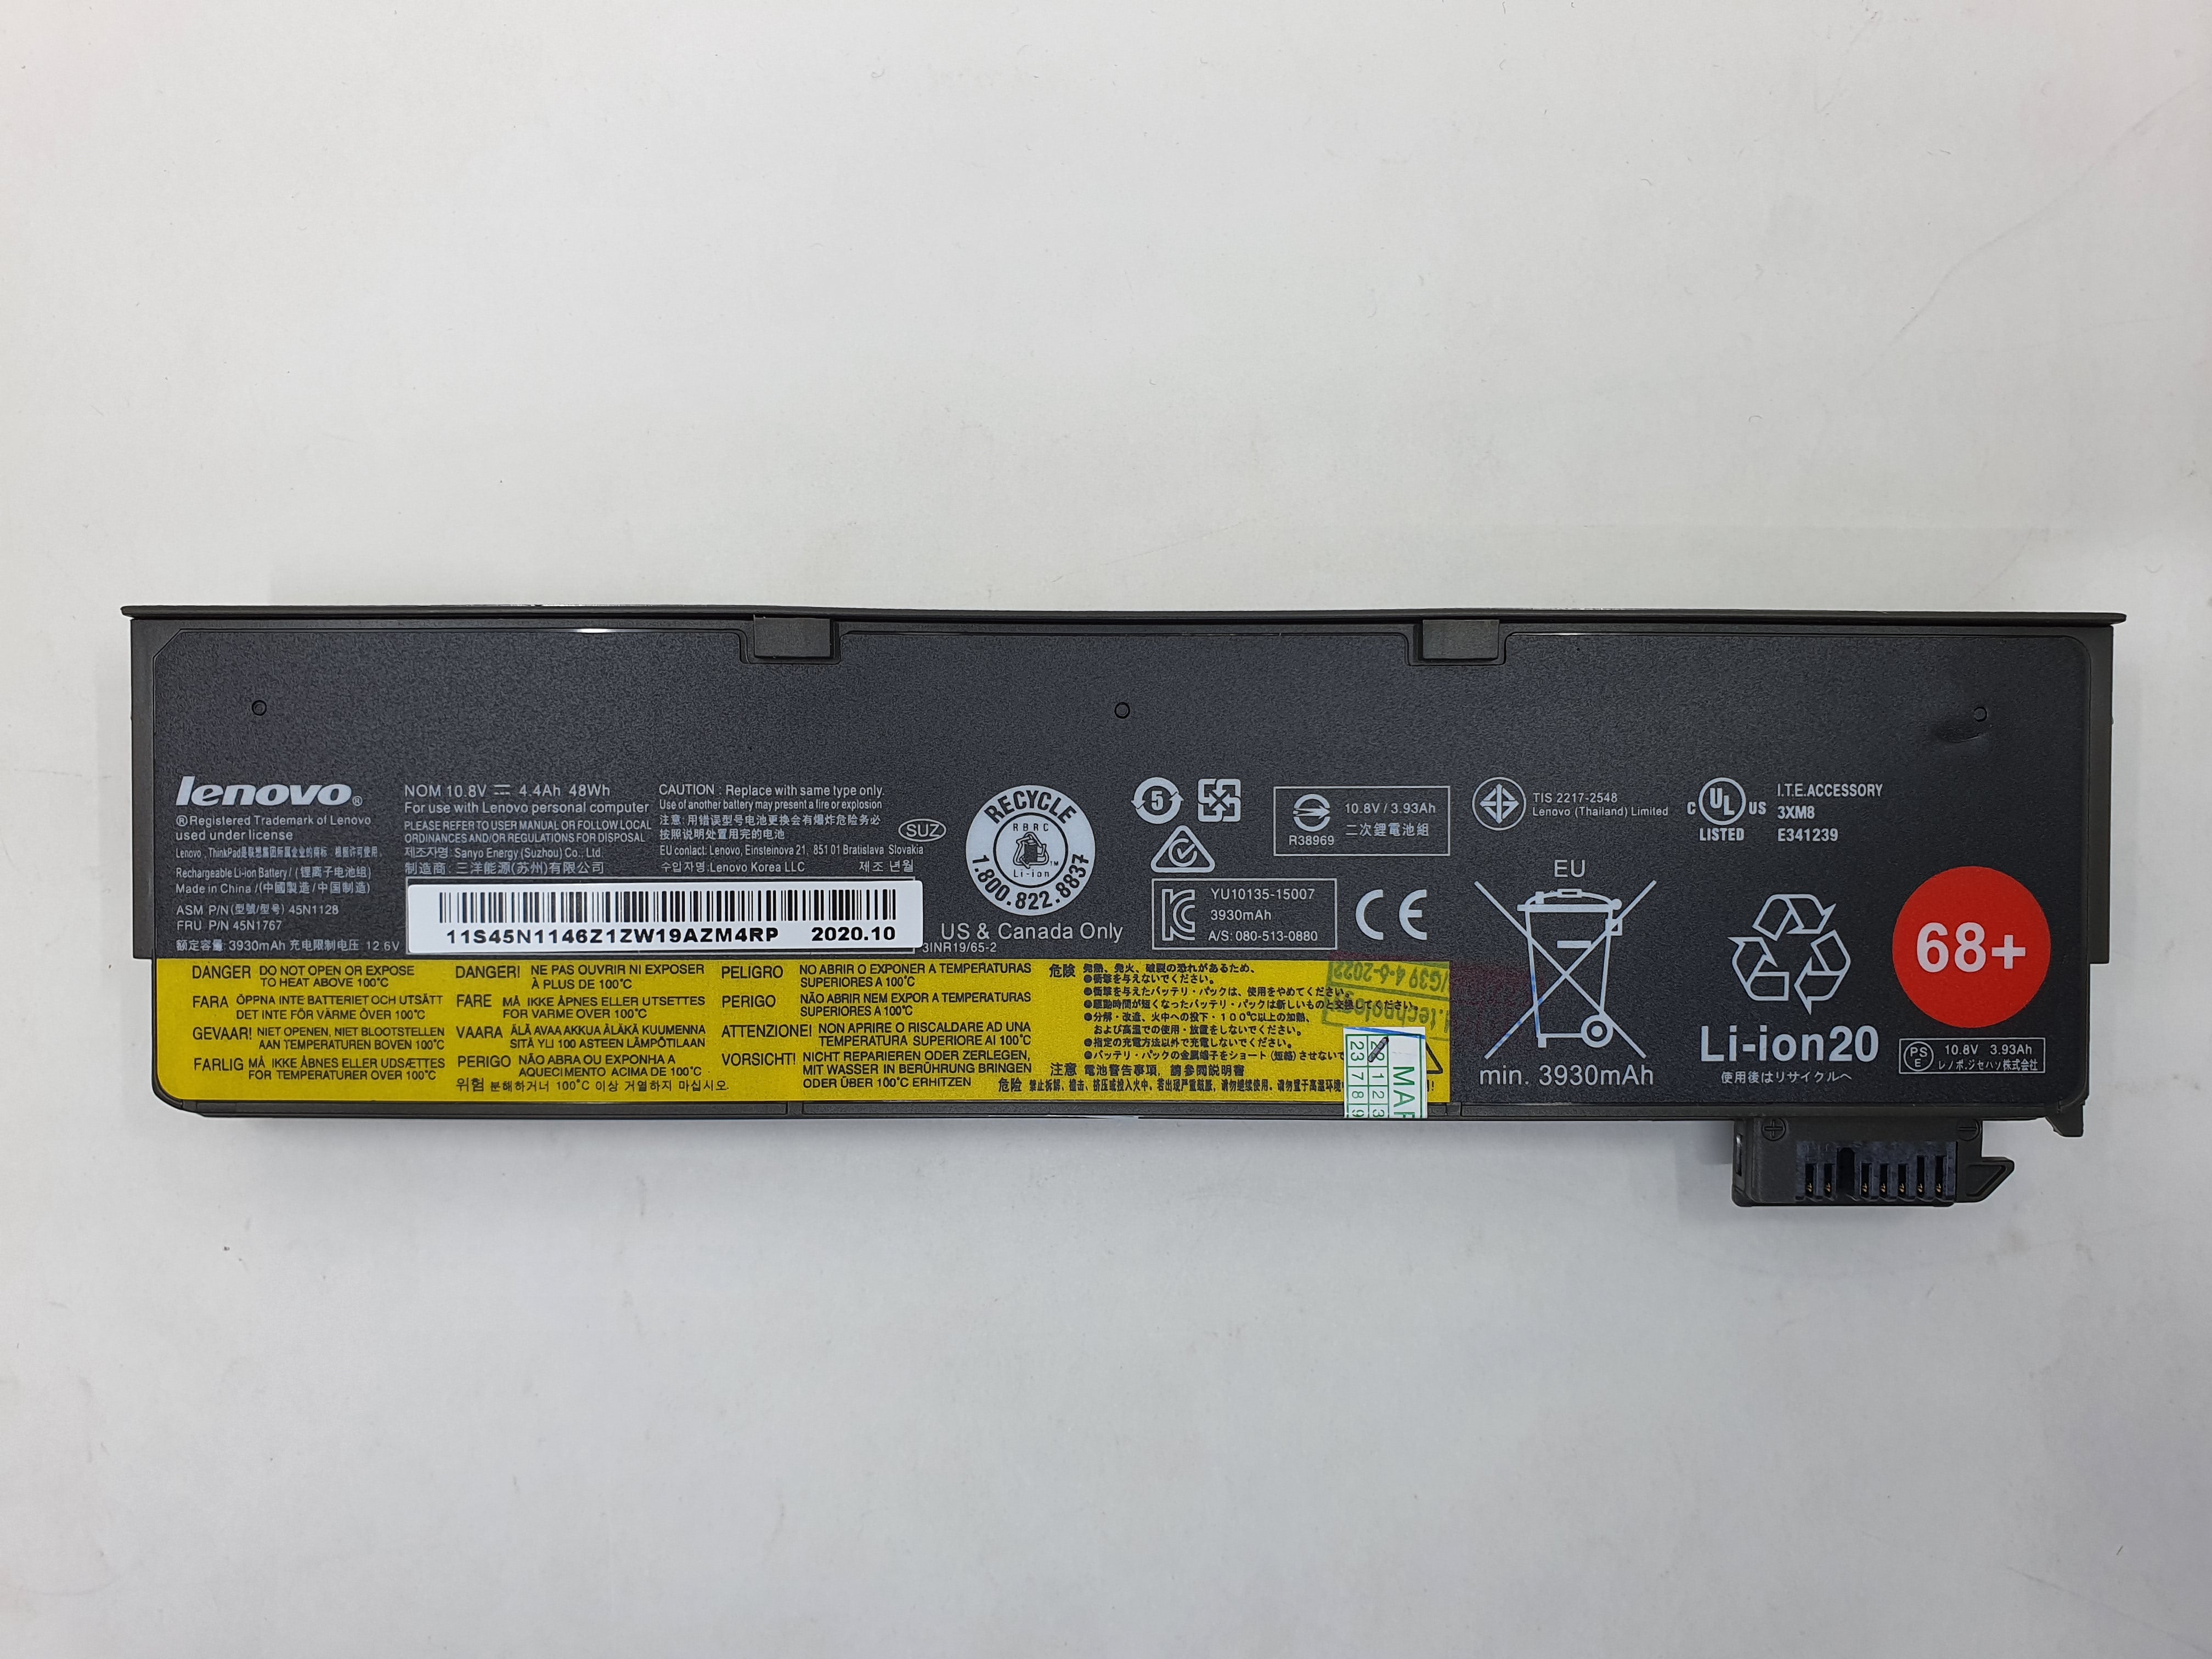 Lenovo Battery X270 ThinkPad A1 for Replacement - Lenovo ThinkPad X270